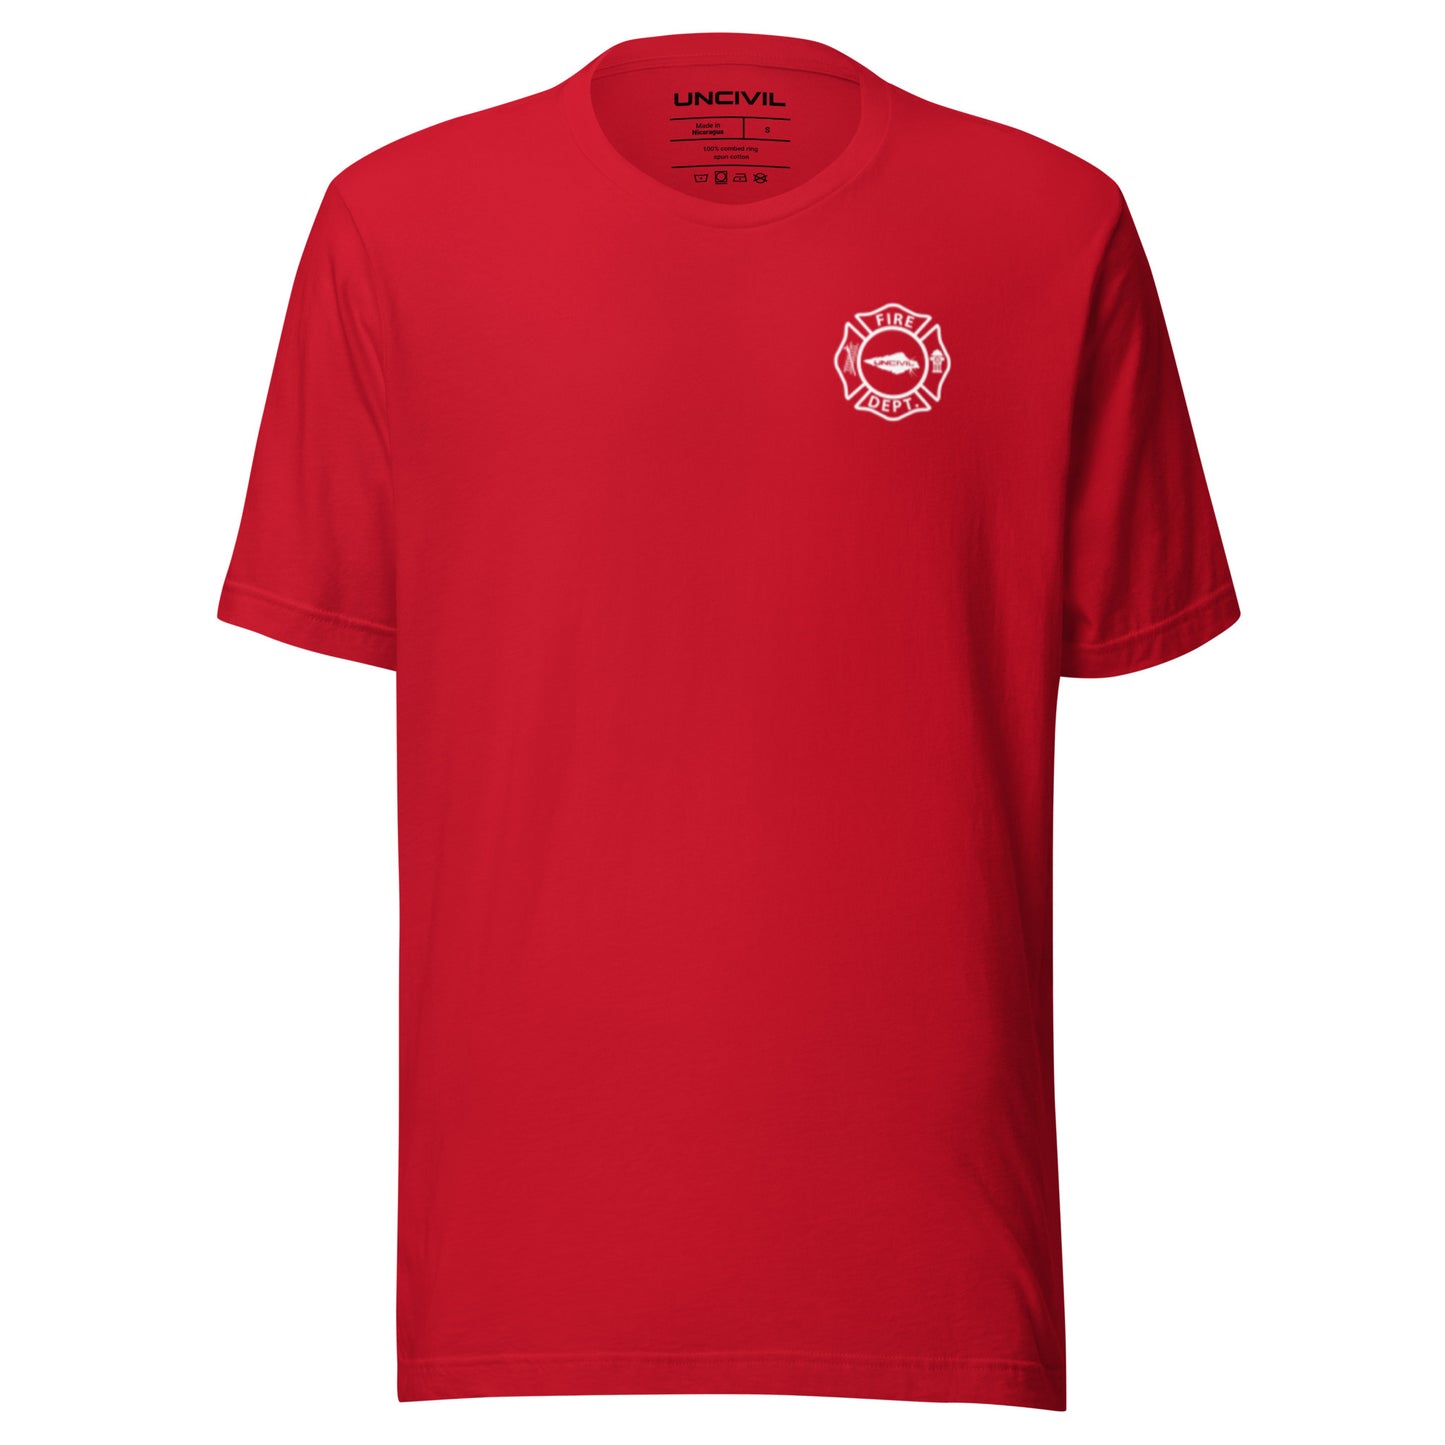 Keys to the City Halligan shirt, Red unisex t-shirt with maltese cross